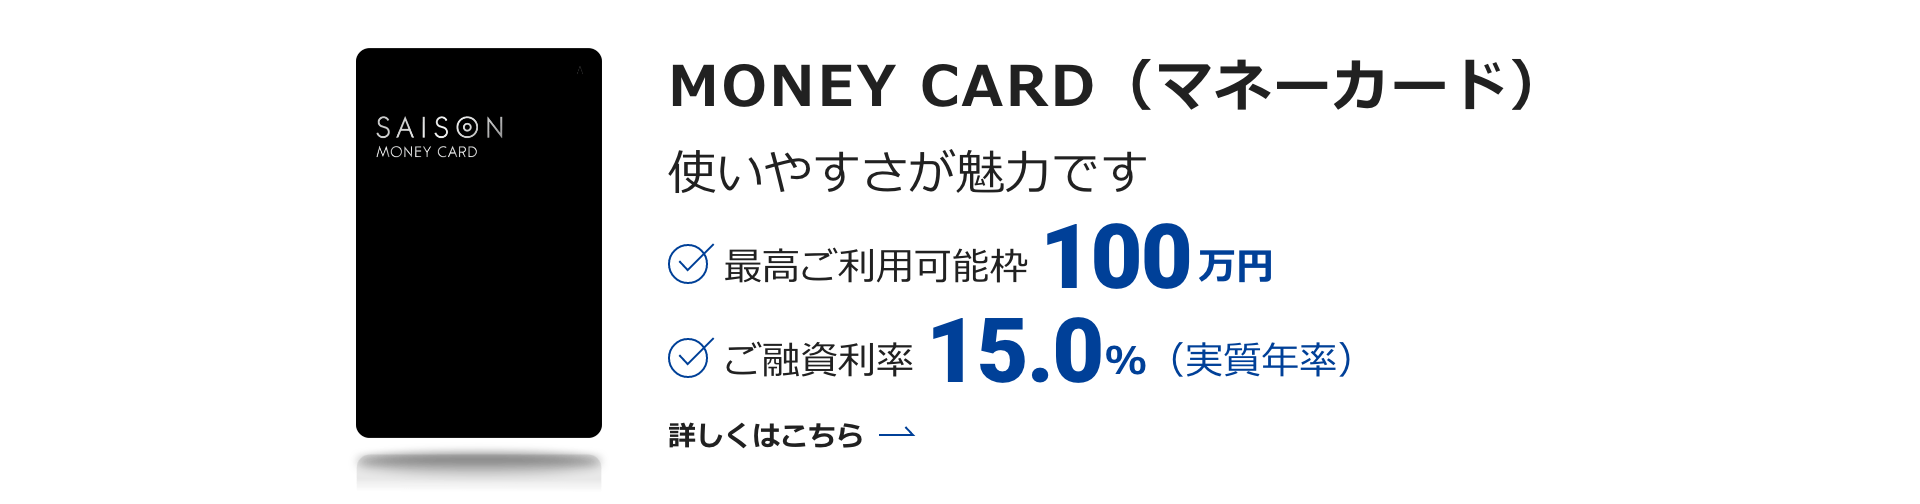 MONEY CARD（マネーカード）|使いやすさが魅力的です。|最高ご利用可能枠100万円|ご融資率15.0%(実質年率)